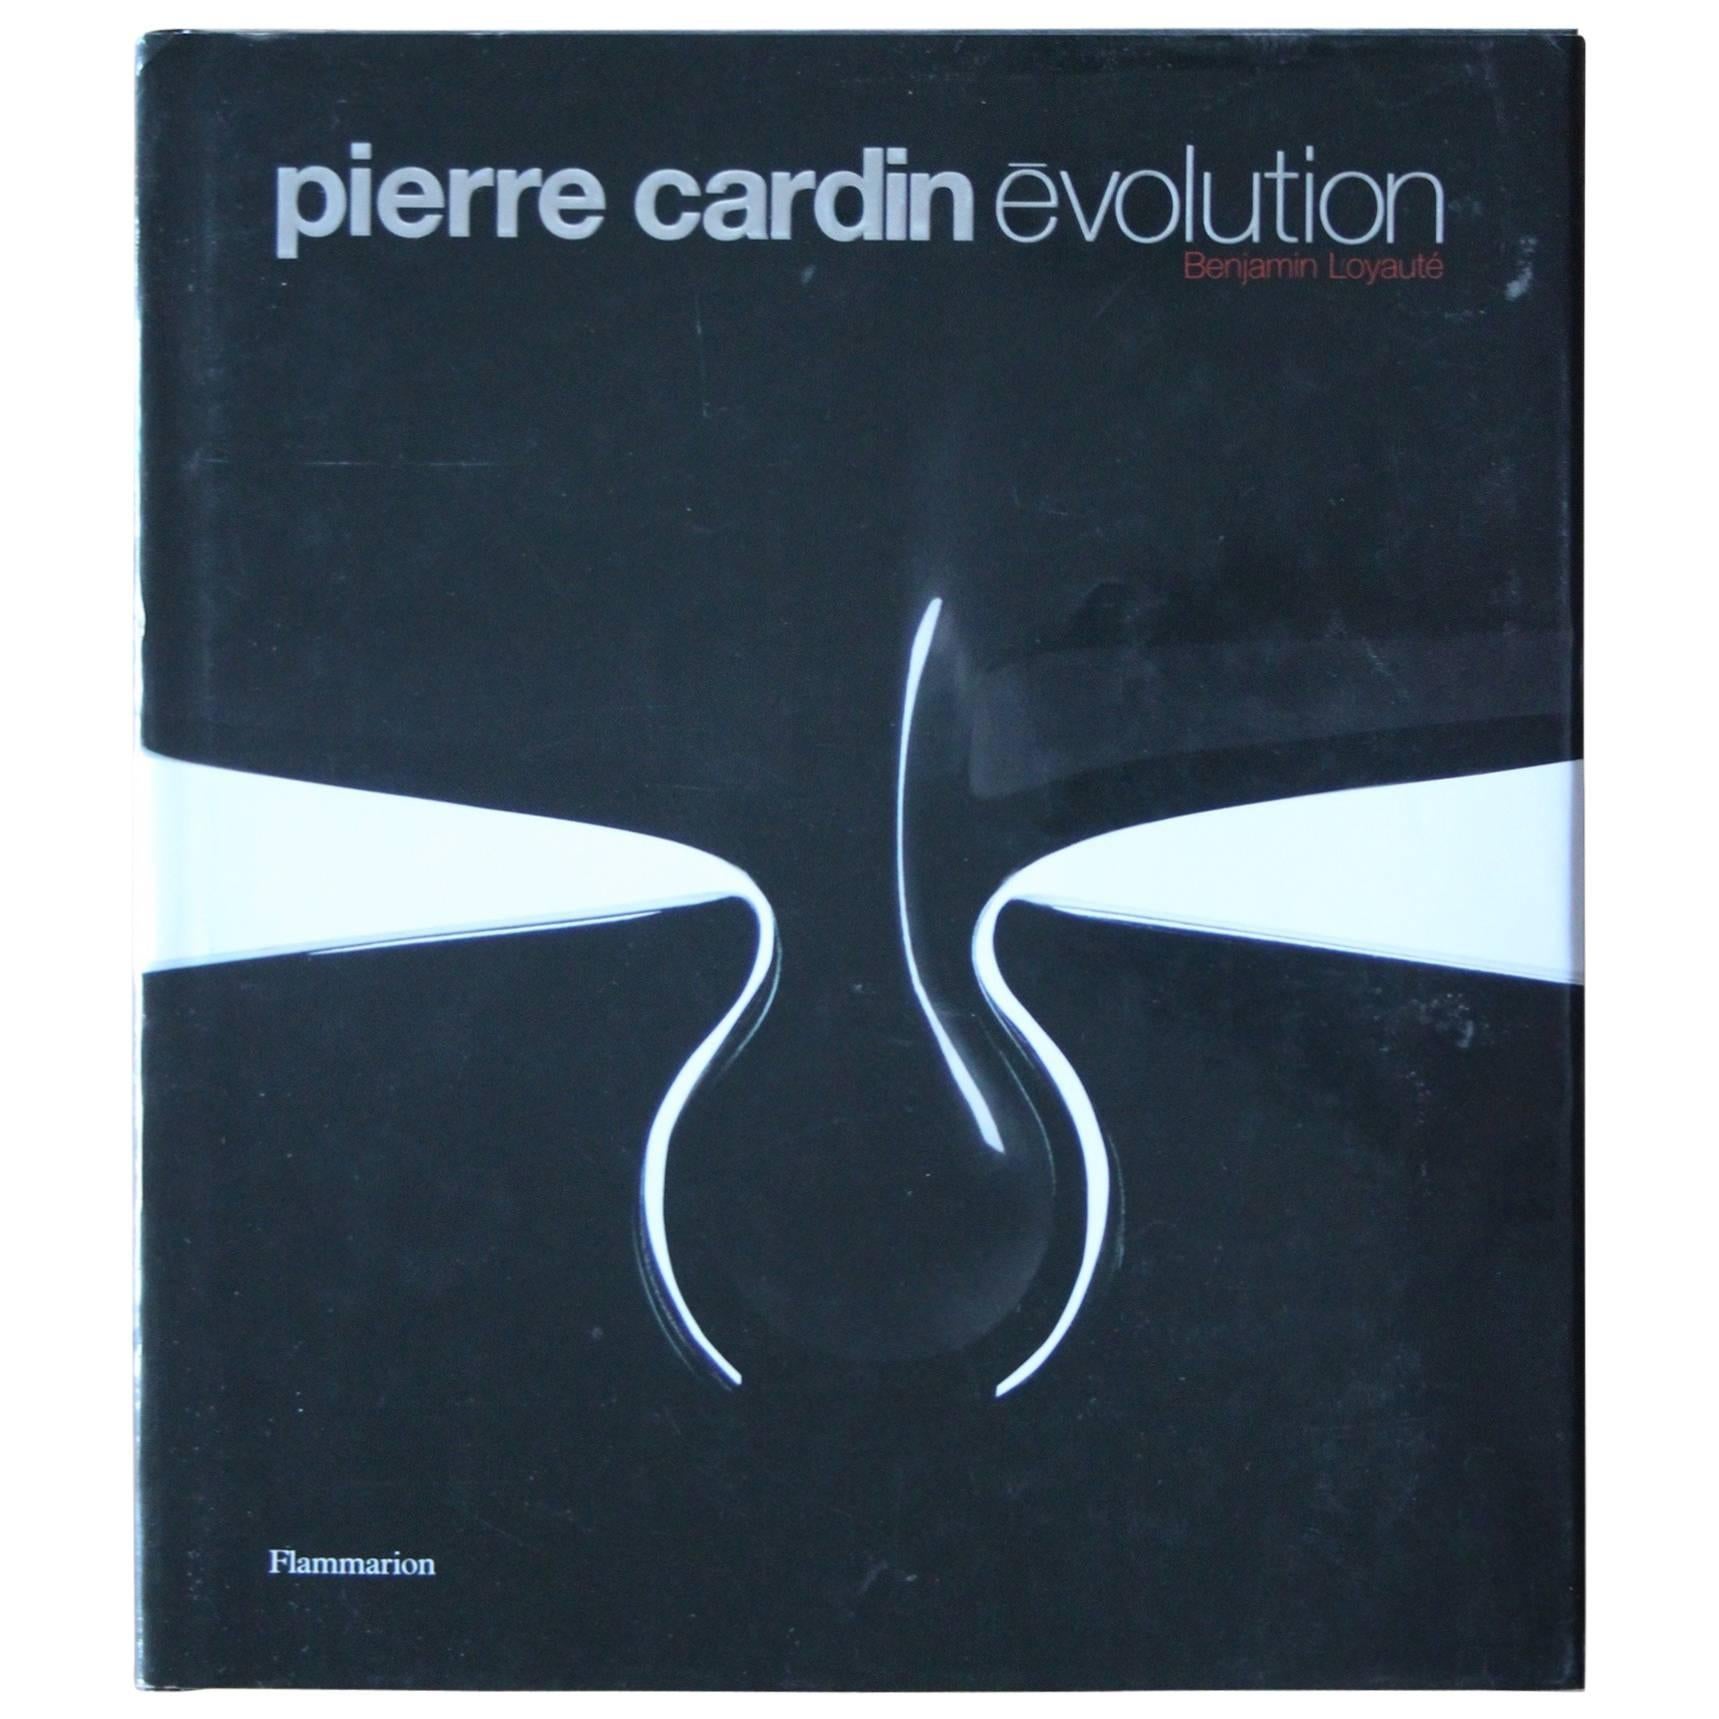 Pierre Cardin "Evolution"